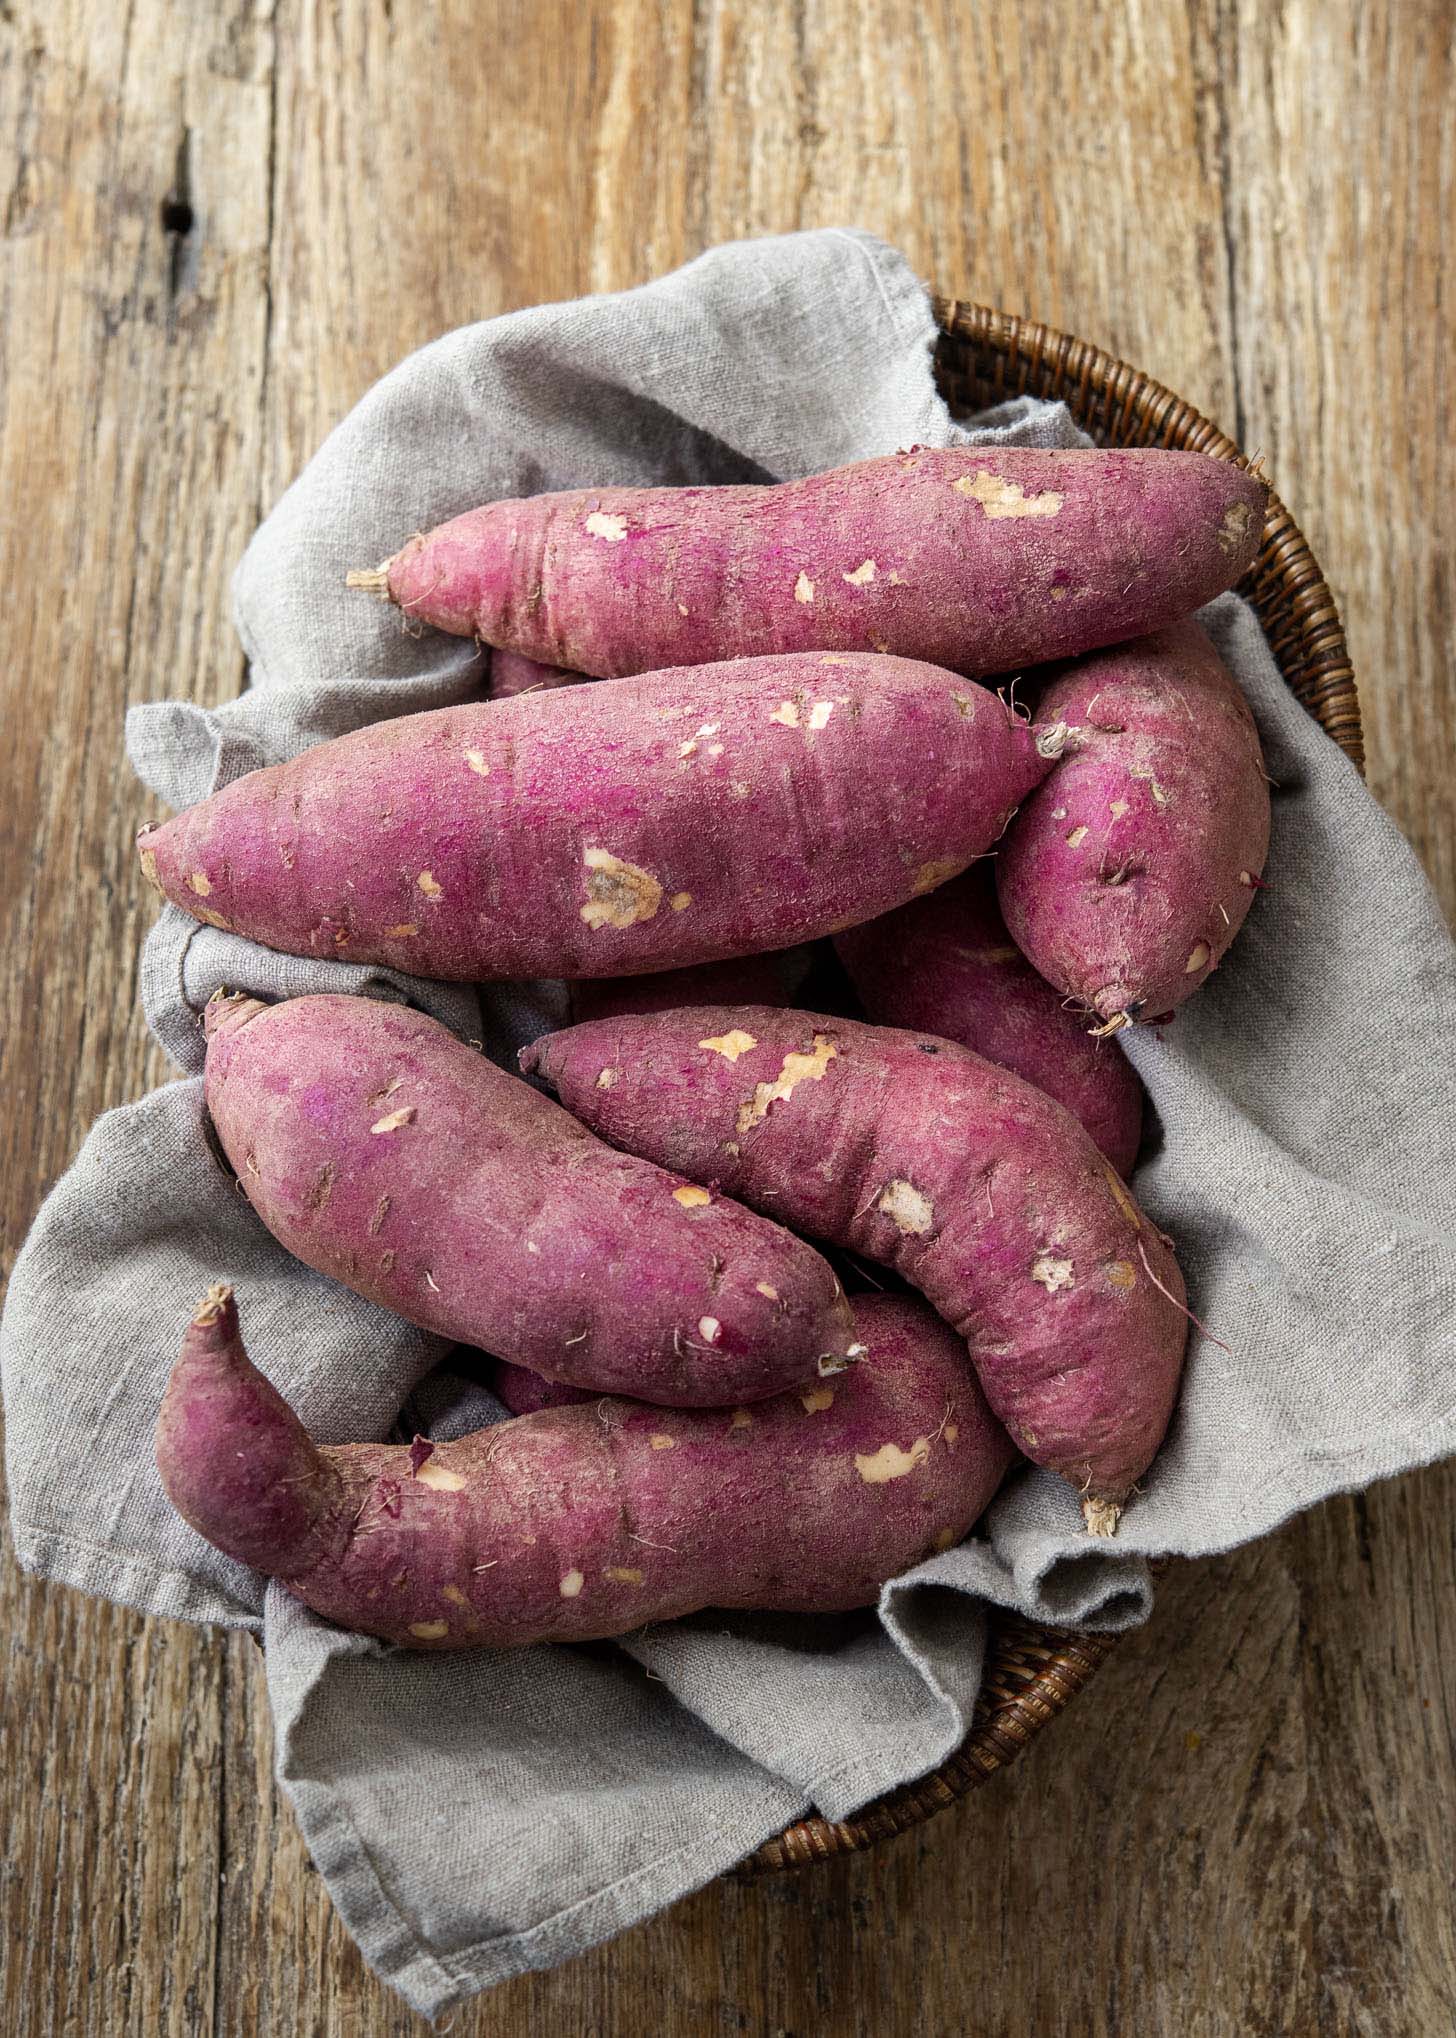 Korean sweet potatoes showing purple skin.